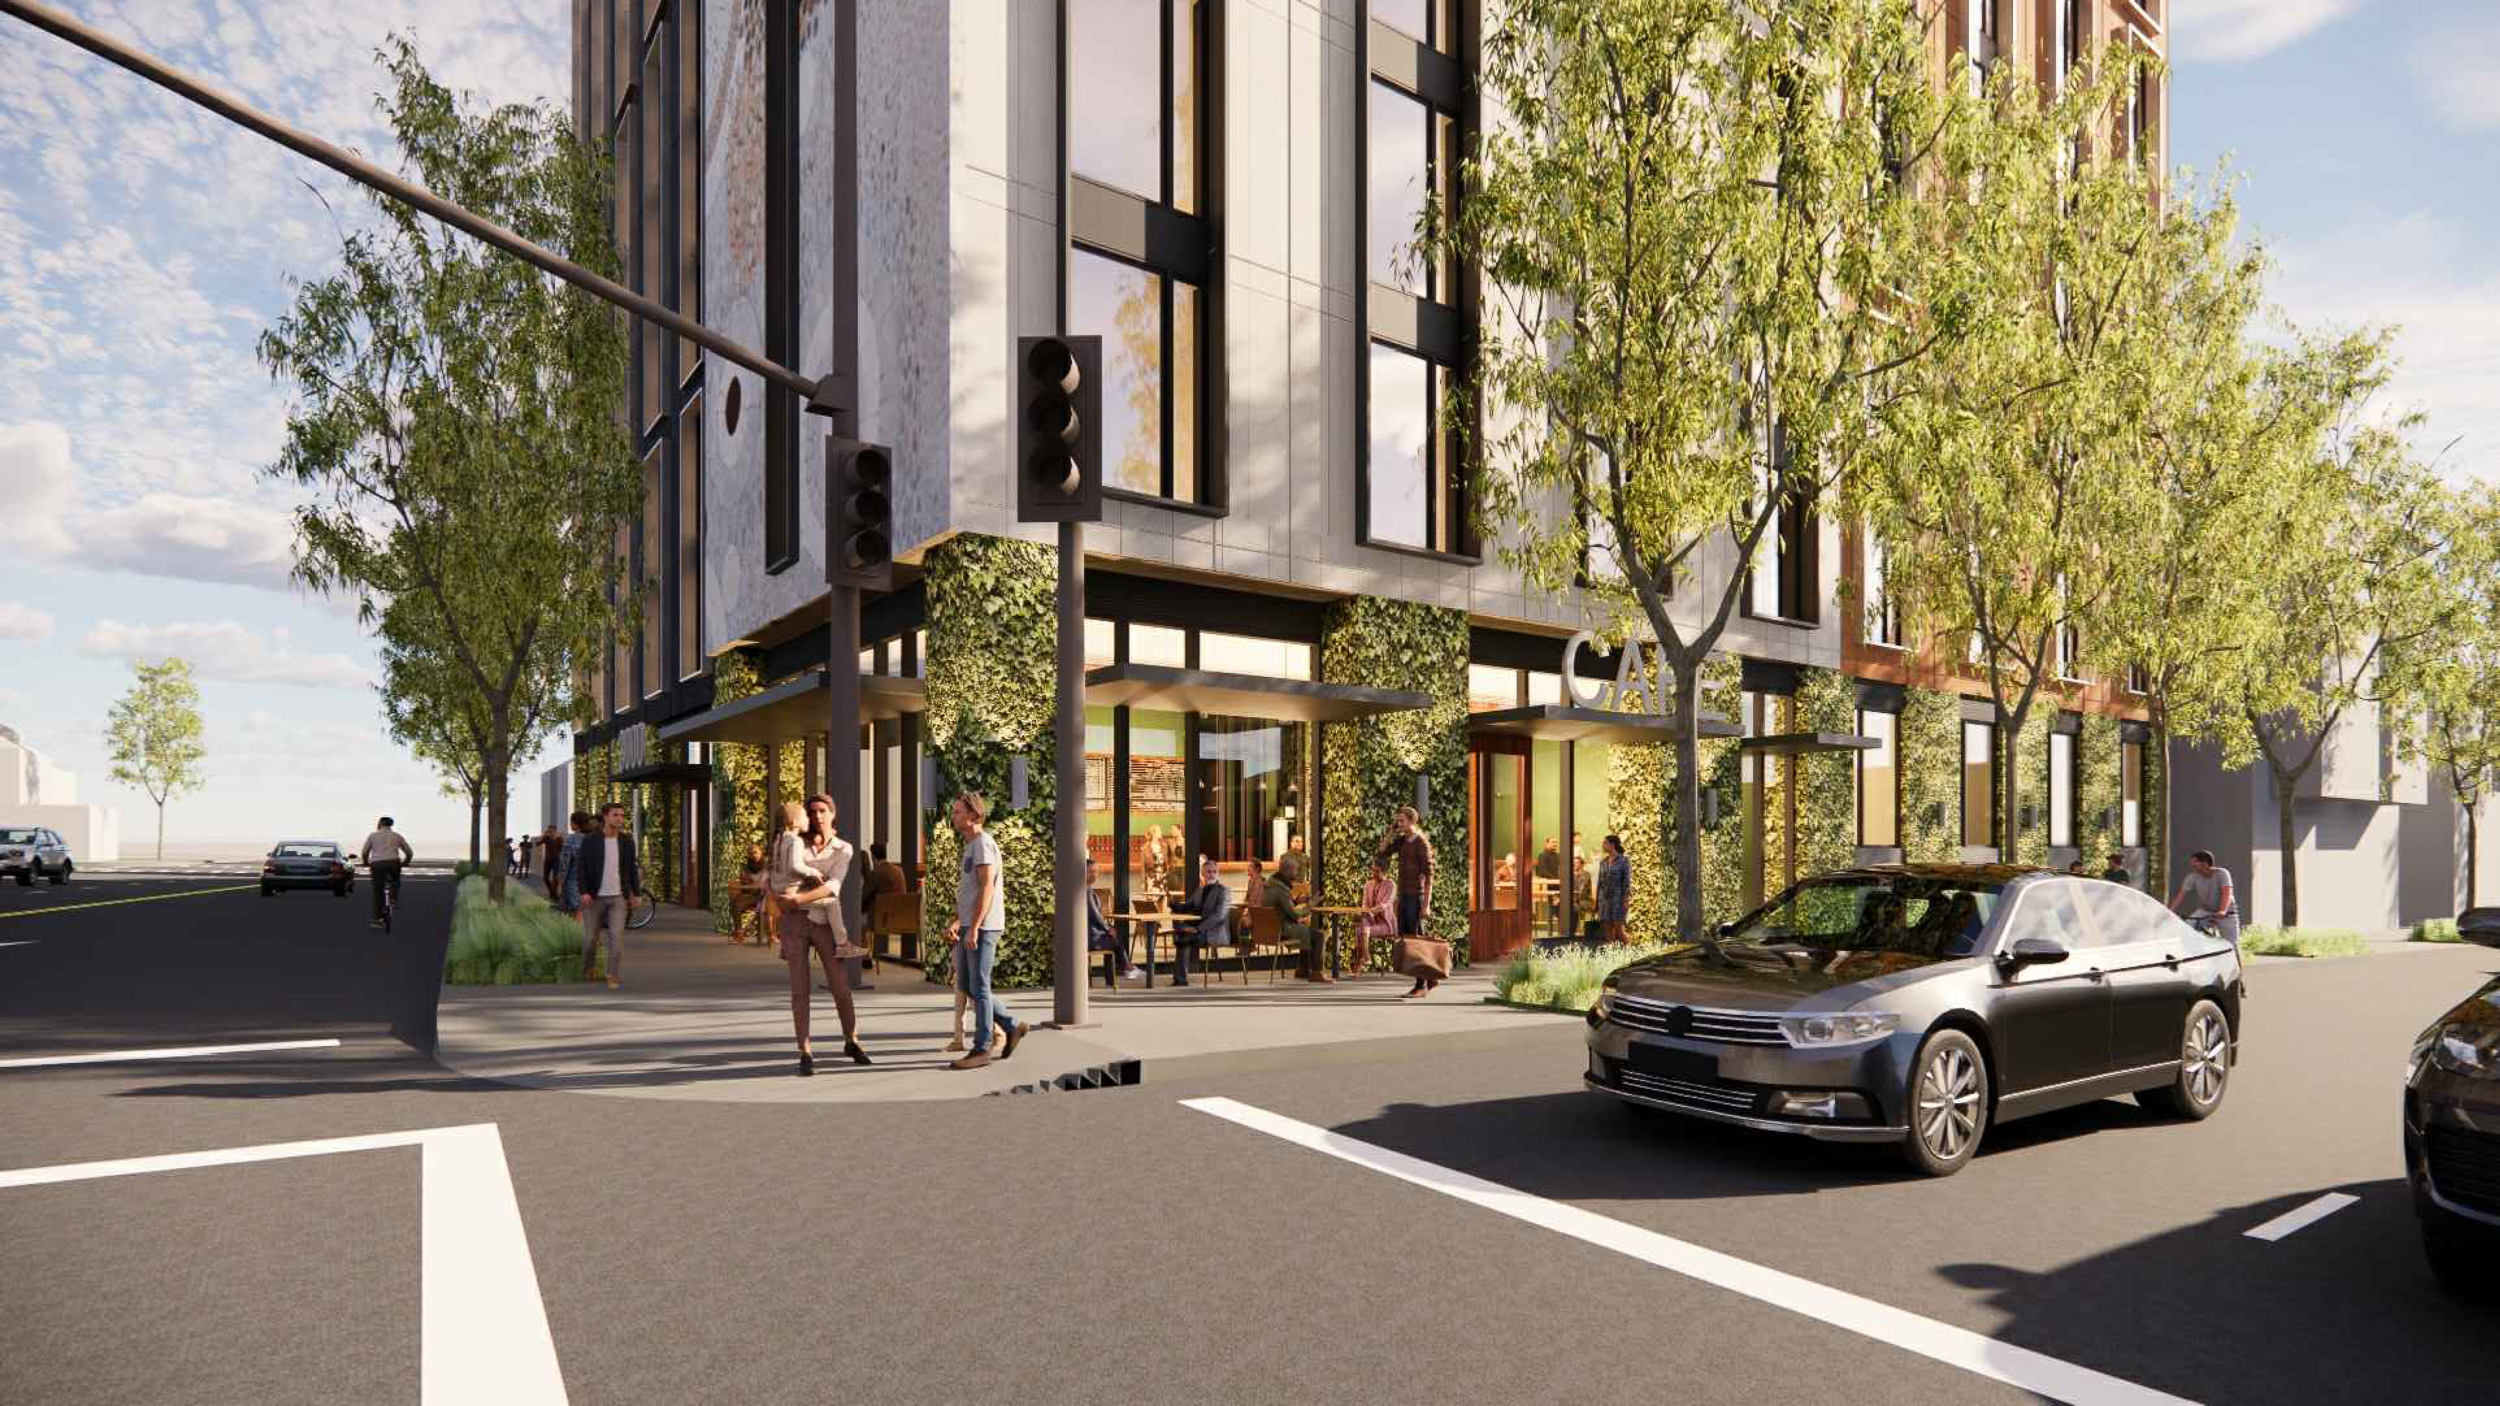 3000 Shattuck Avenue street level retail activity, rendering by Trachtenberg Architects